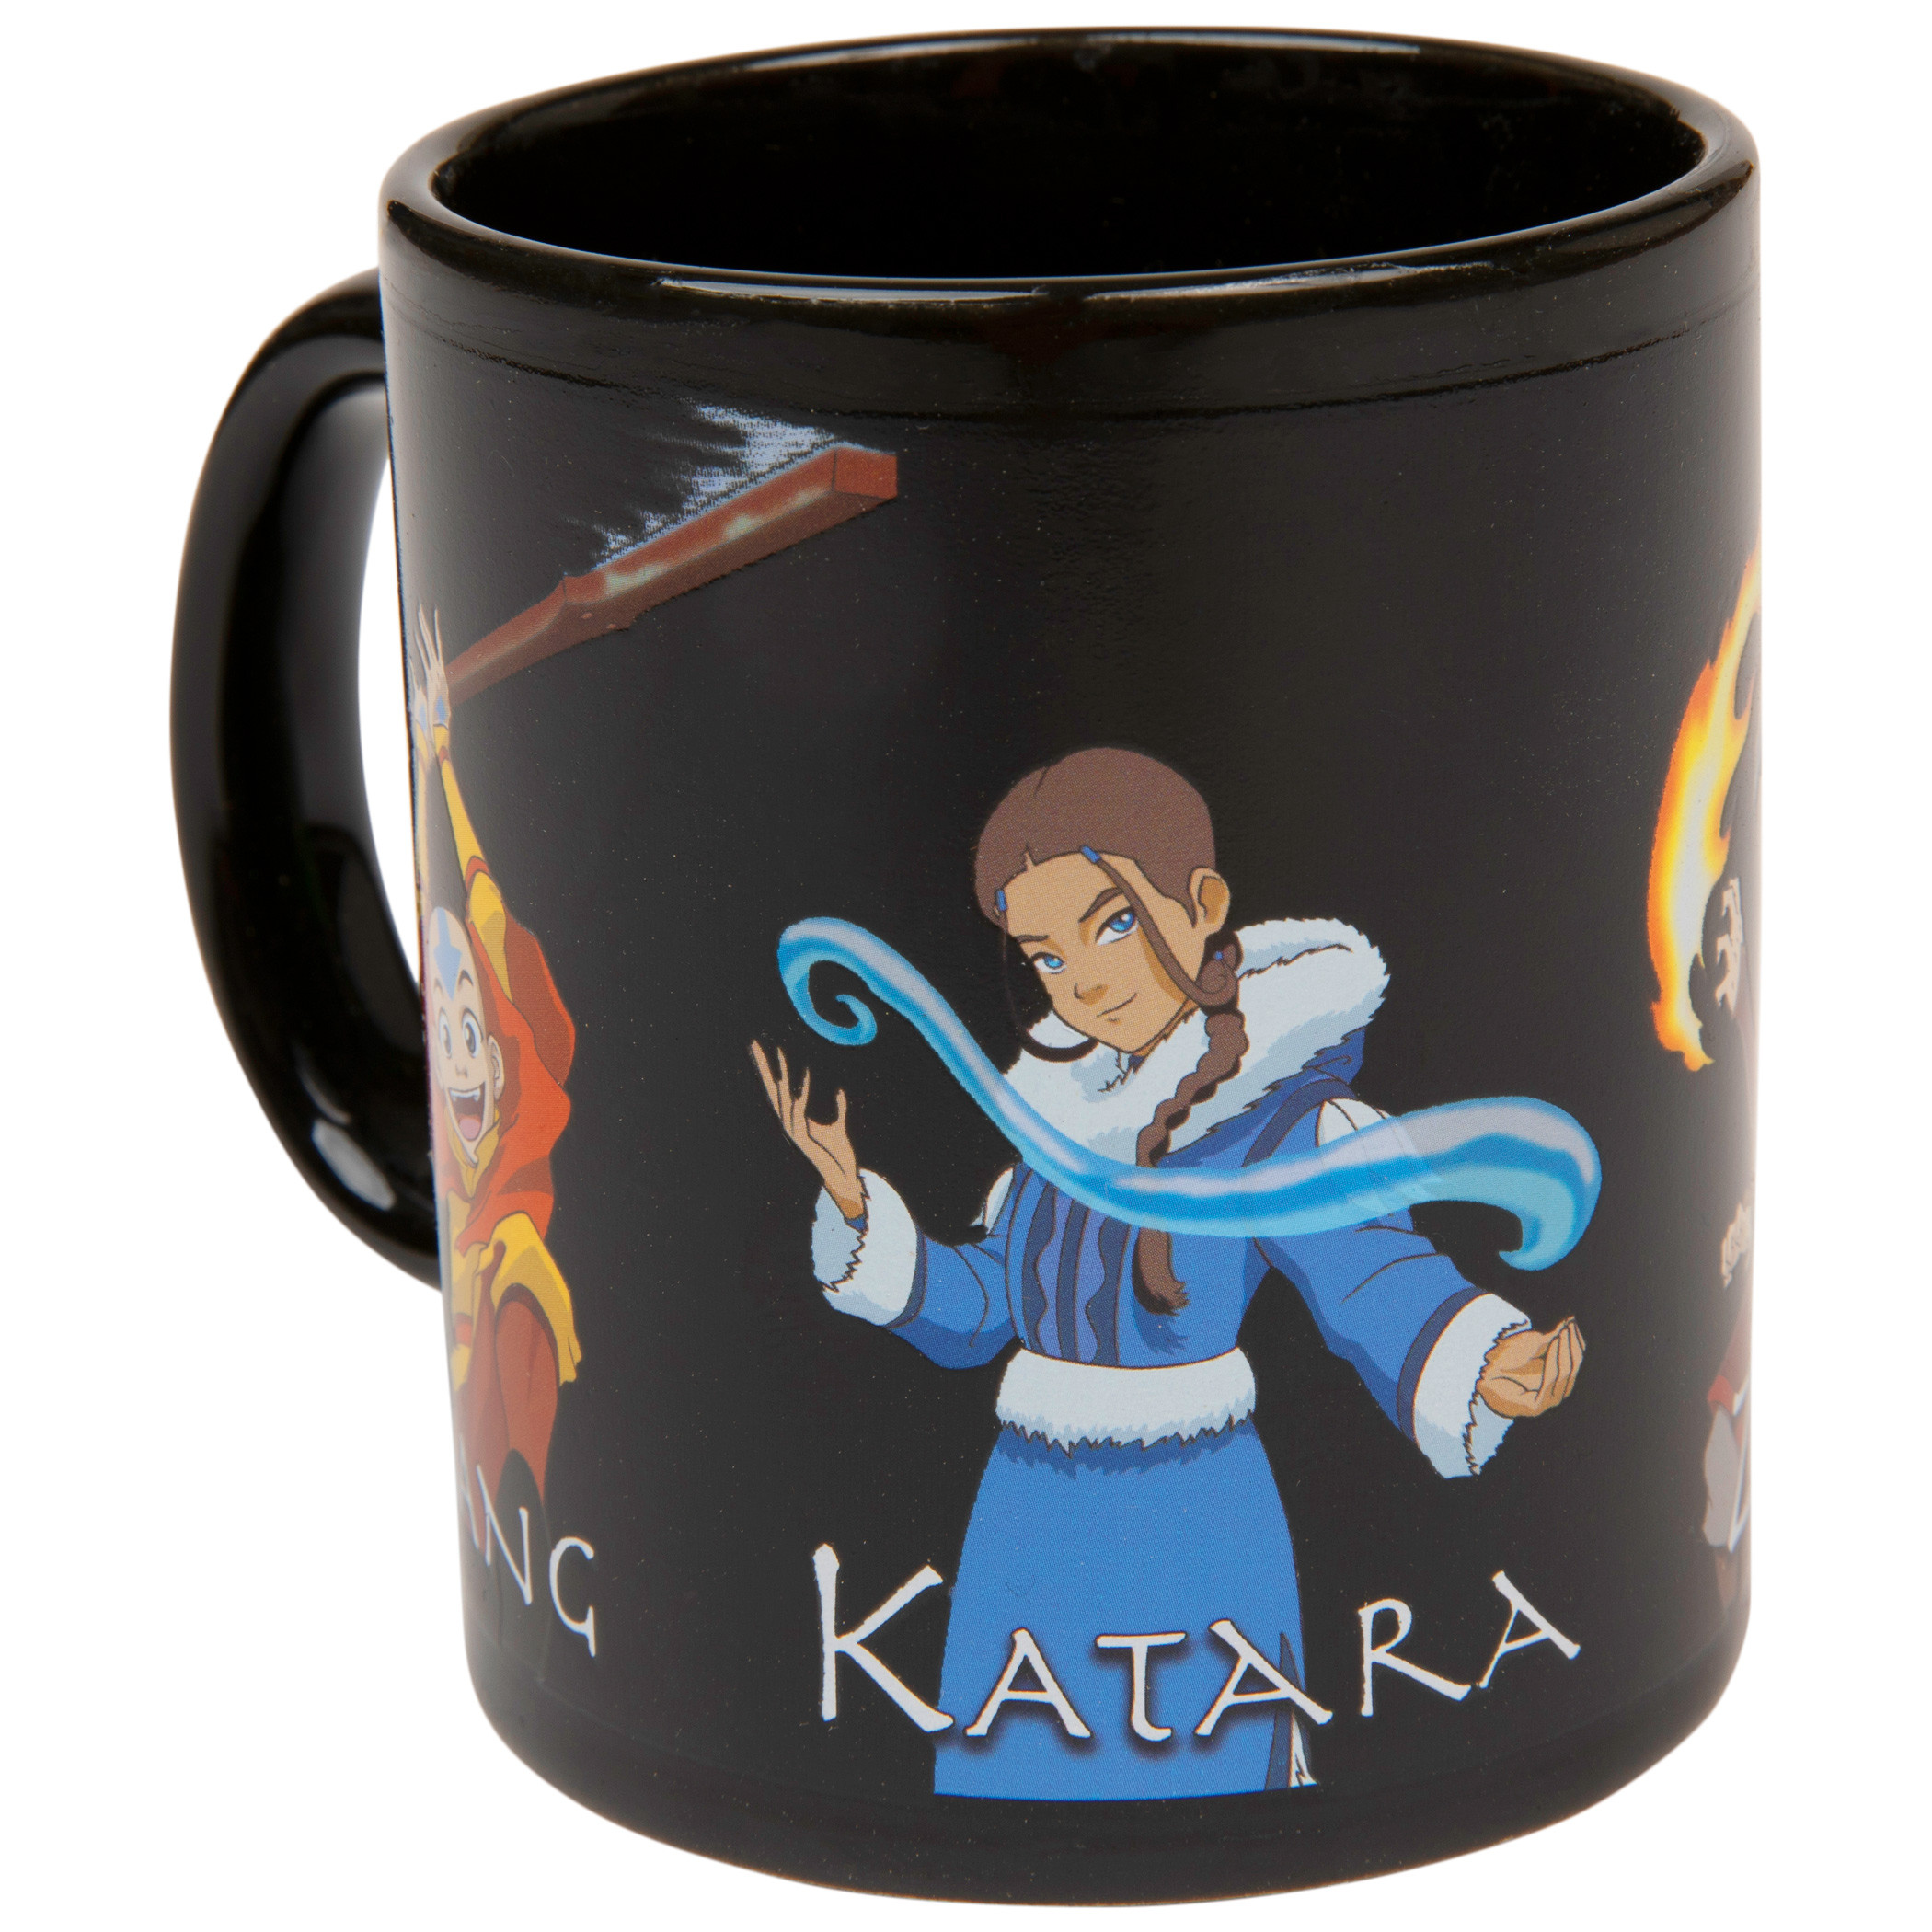 Avatar: The Last Airbender Characters Heat Change Ceramic Mug